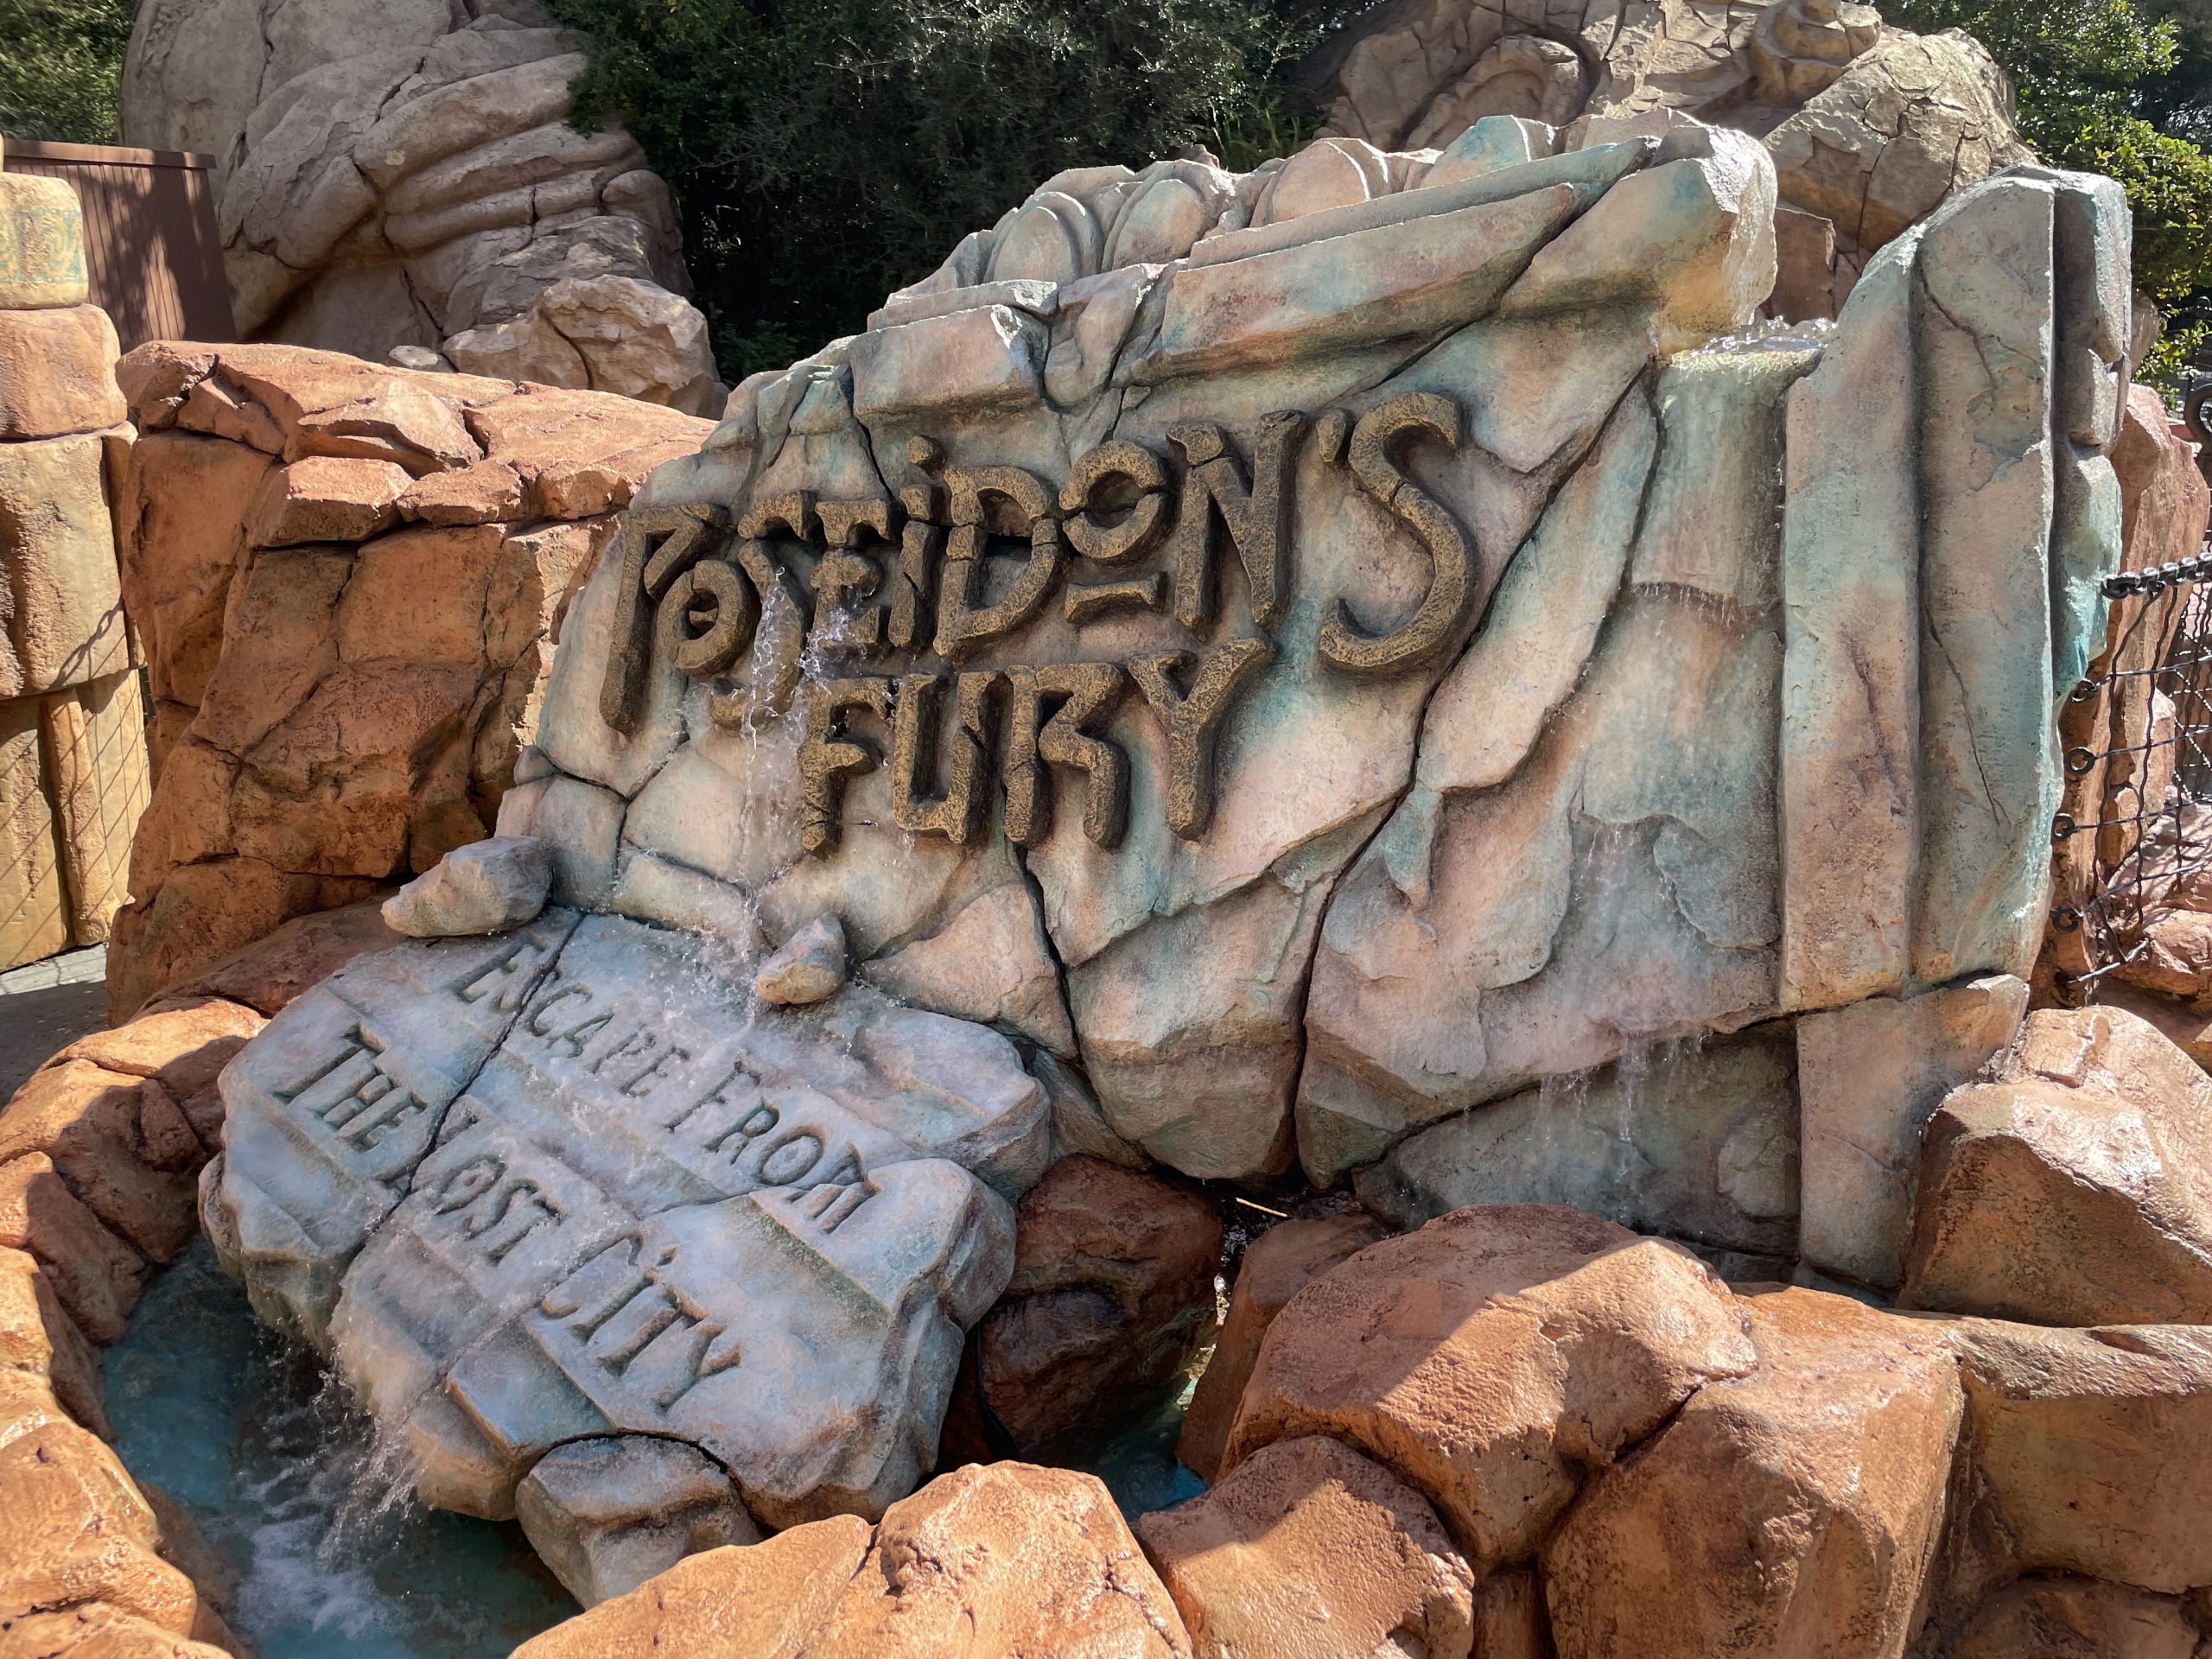 Universal to permanently close Poseidon's Fury attraction